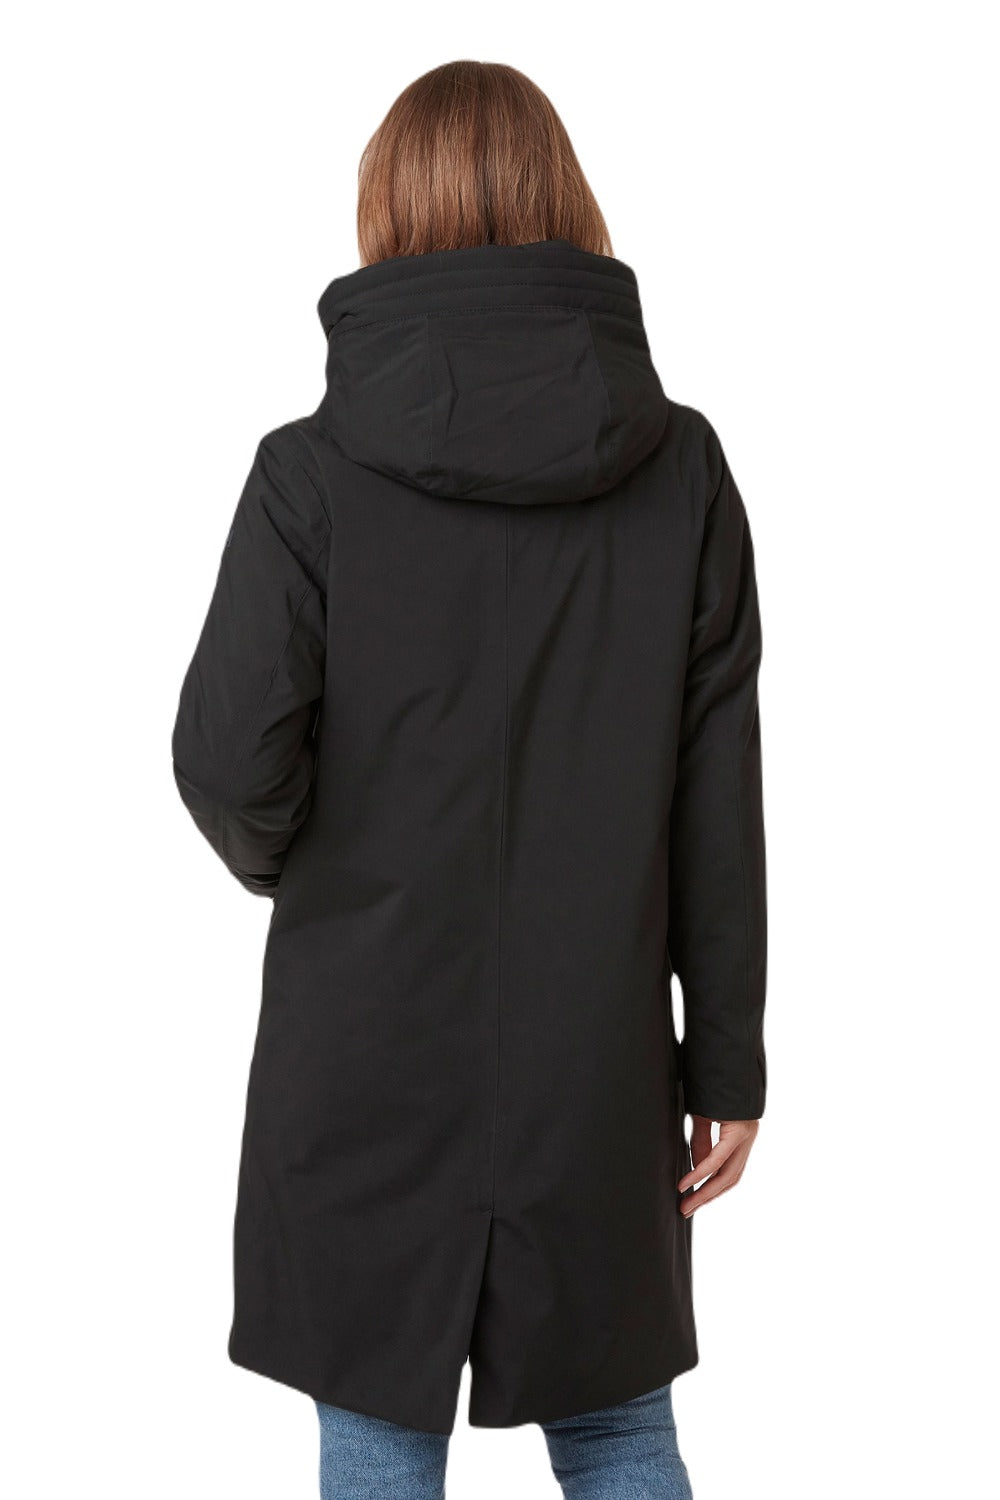 Helly Hansen Victoria Insulated Rain Coat in Black 